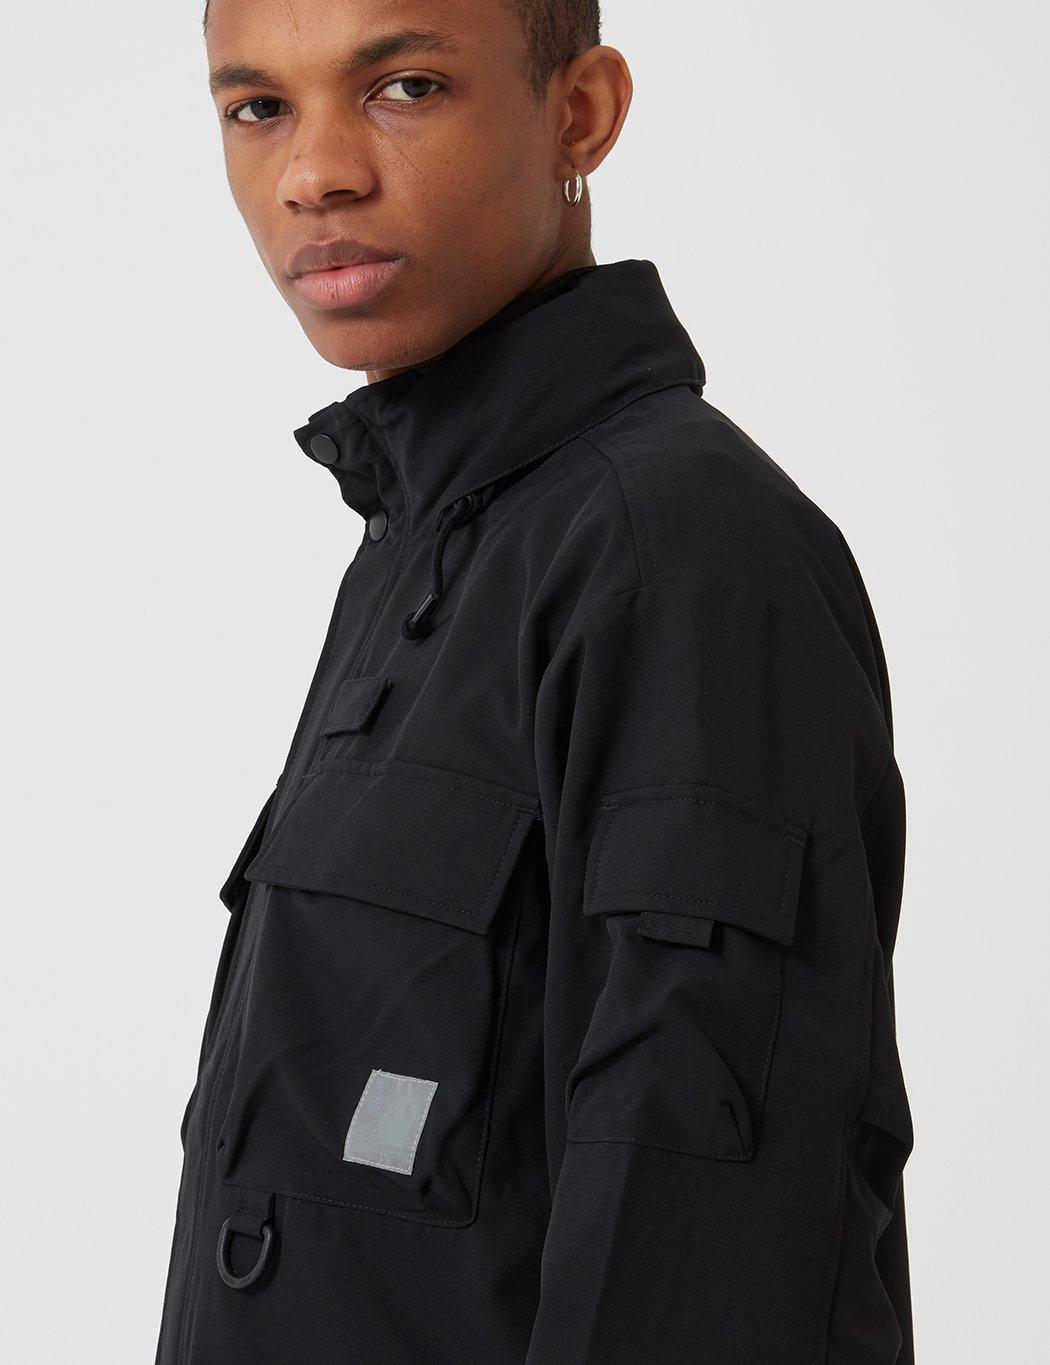 Carhartt Synthetic Elmwood Jacket in Black for Men - Lyst